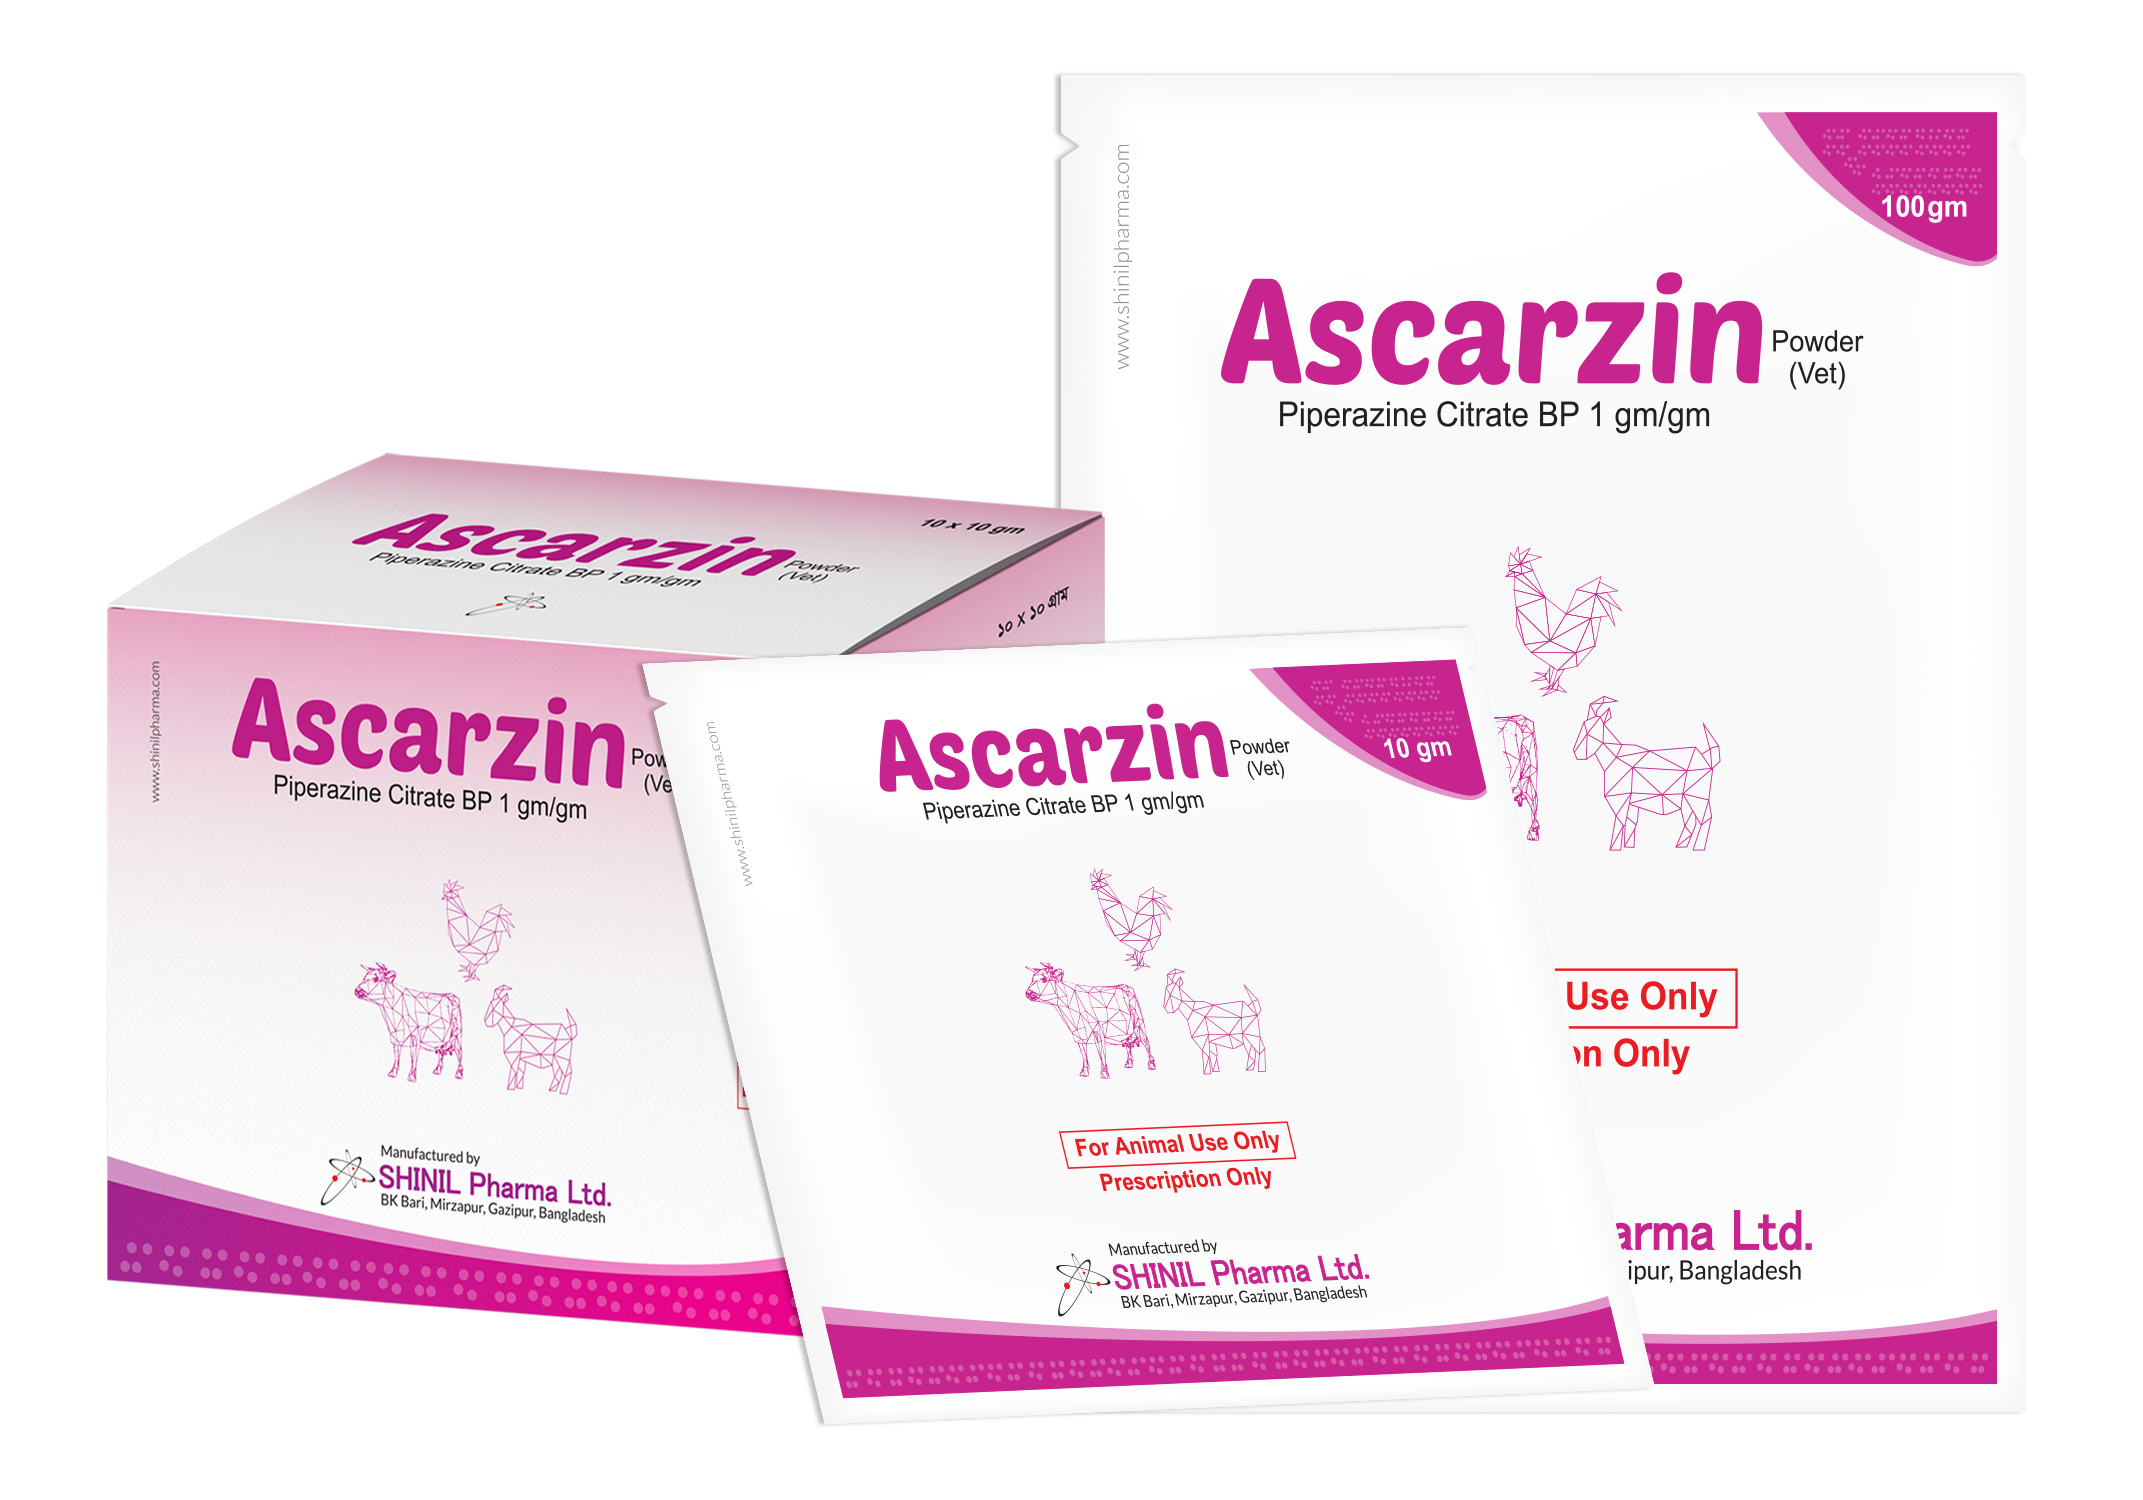 Ascarzin (Vet) Powder